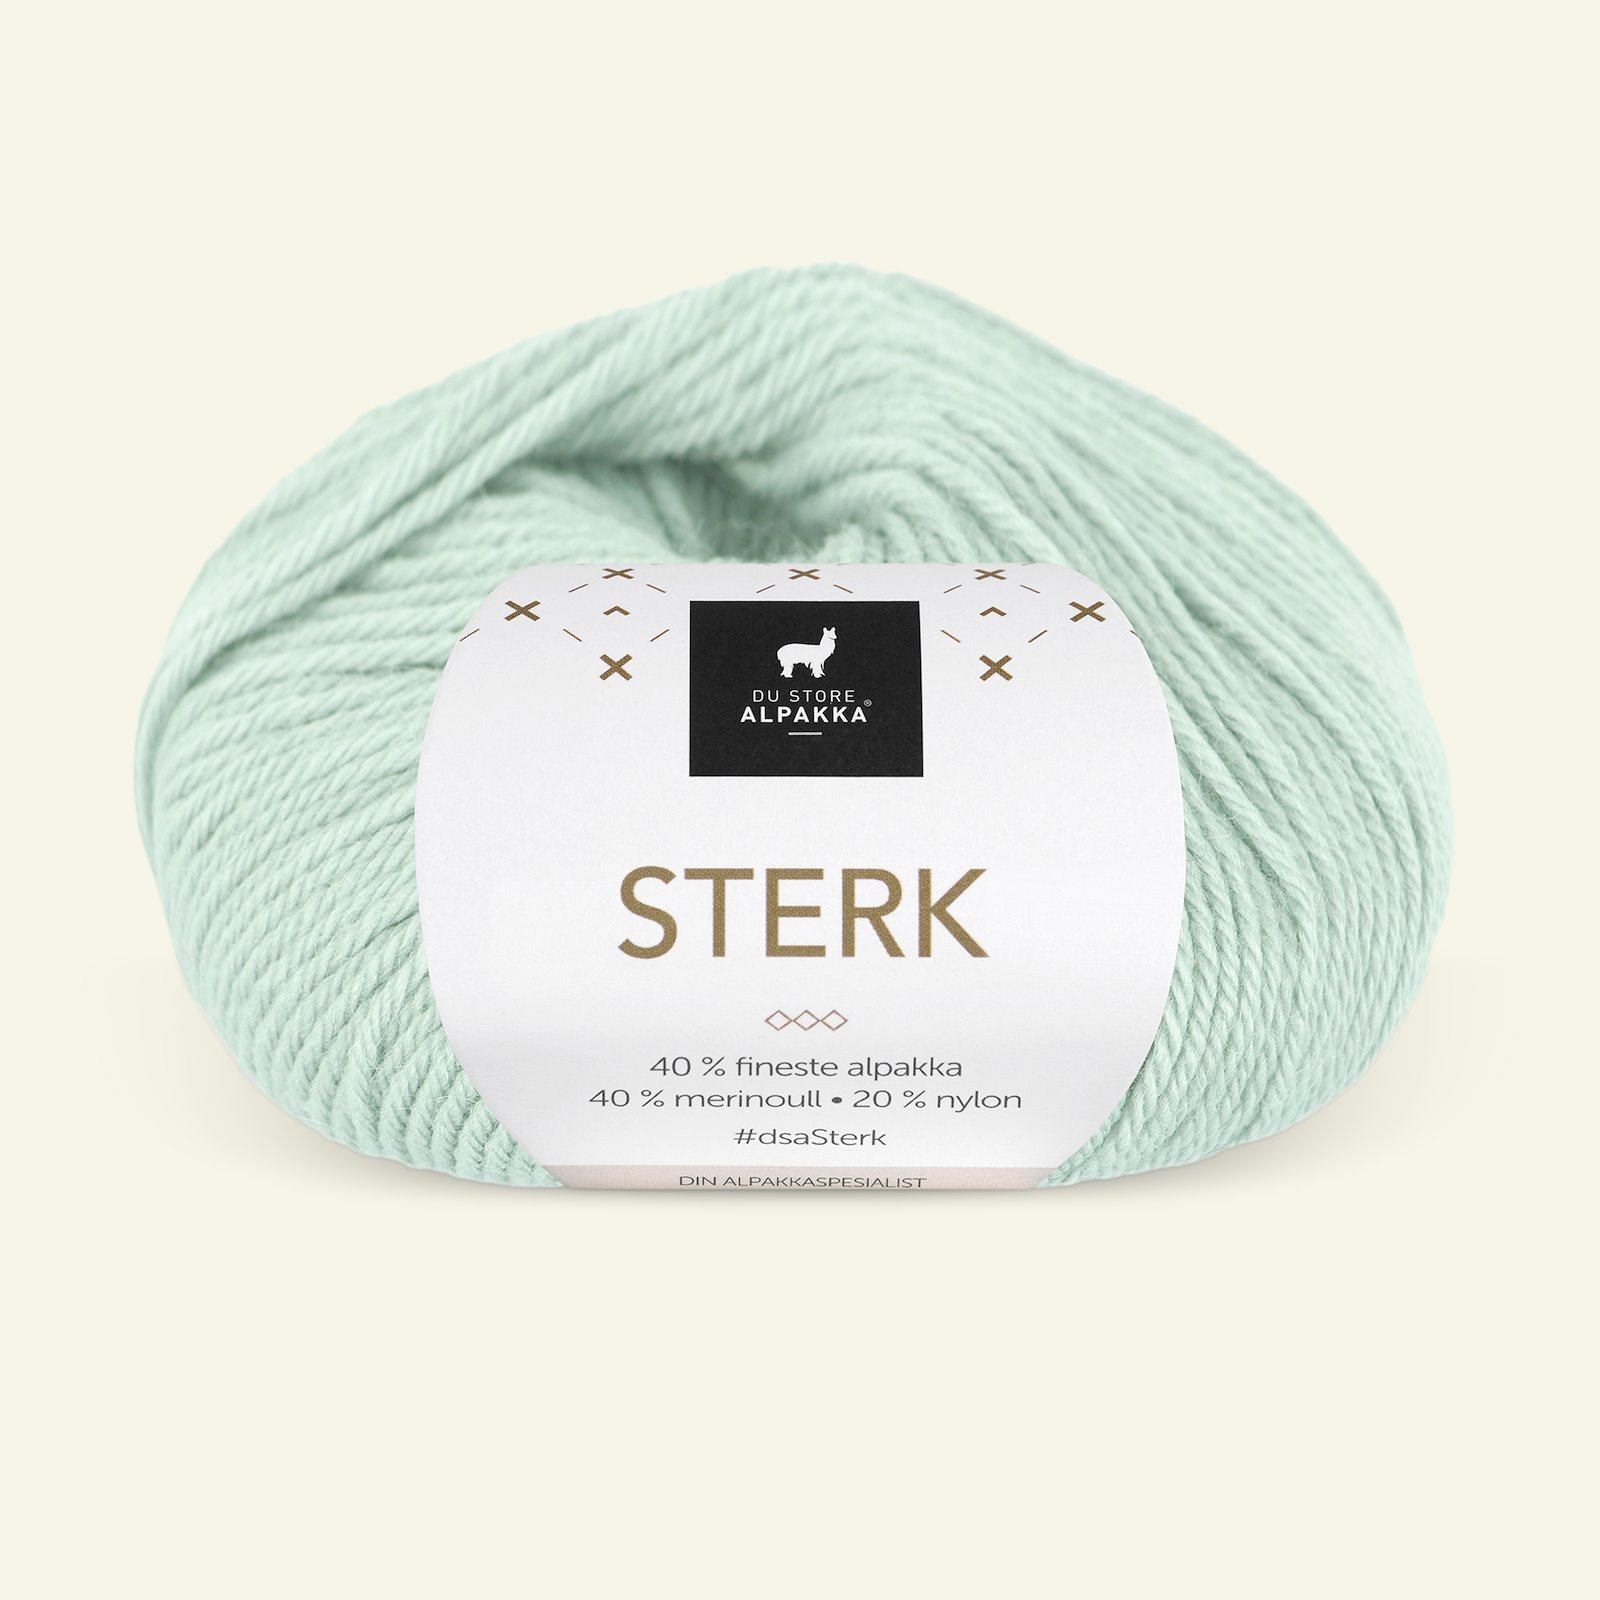 Du Store Alpakka, alpaca merino blandingsgarn, "Sterk", mint grøn (915) 90000707_pack